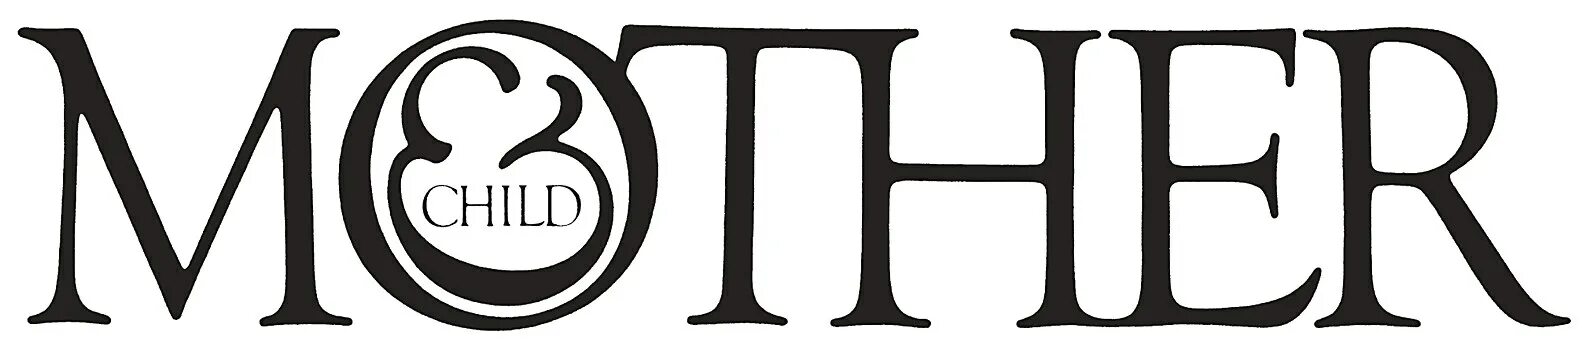 Mothers forums. Херб Любалин. Герб Любалин. Herb Lubalin logo. Типографика герба Любалина.